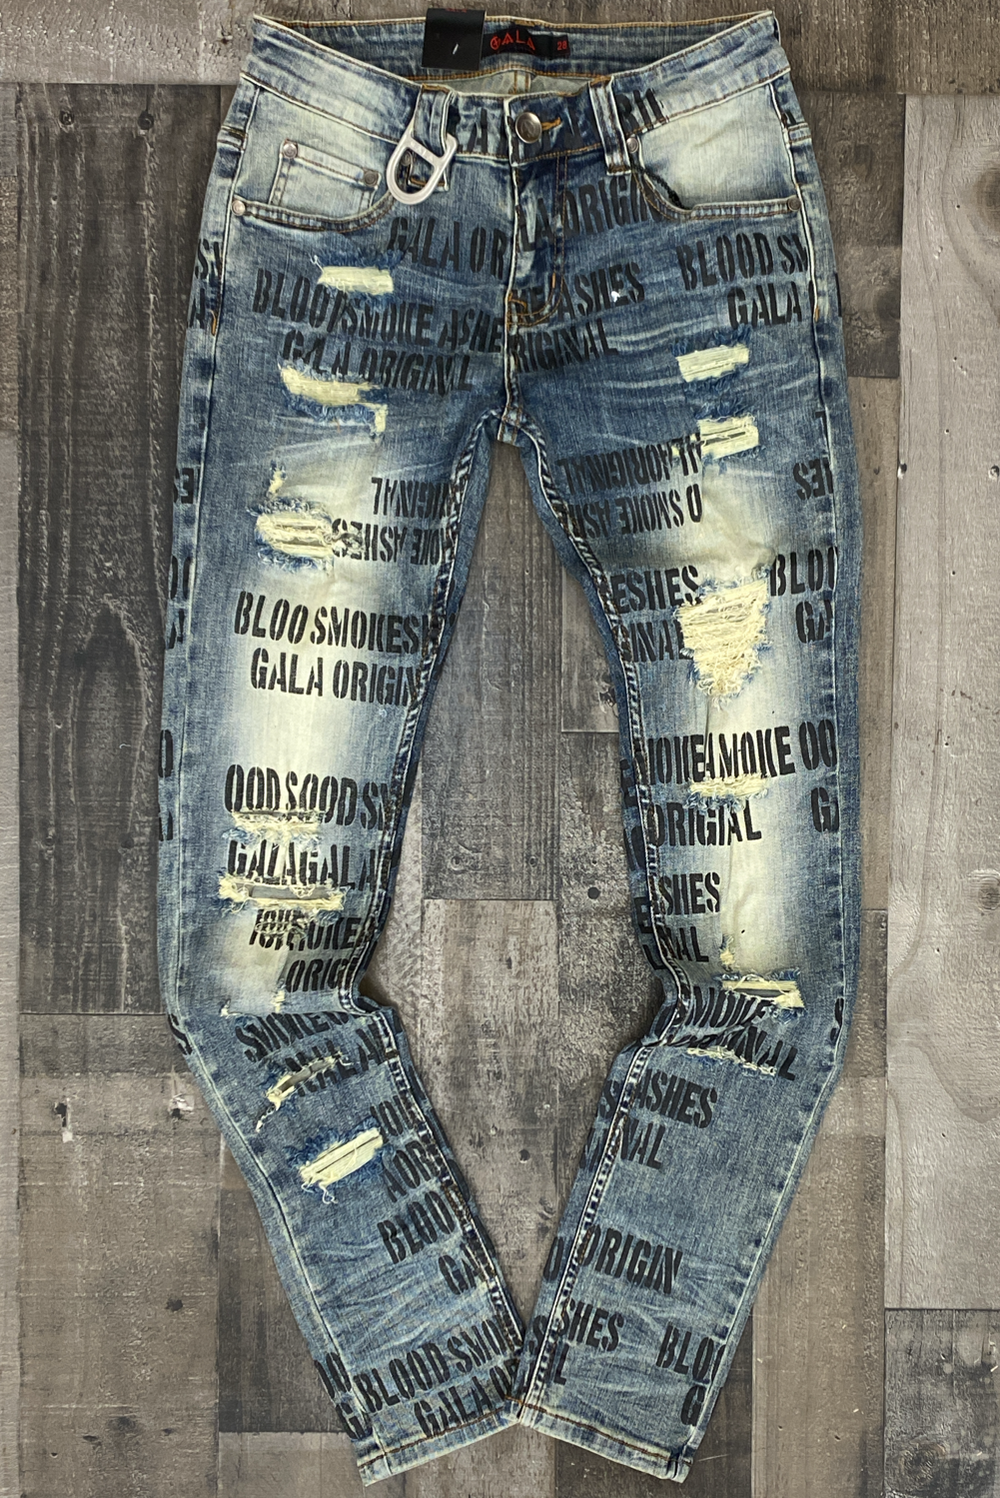 Gala- Vicious denim jeans